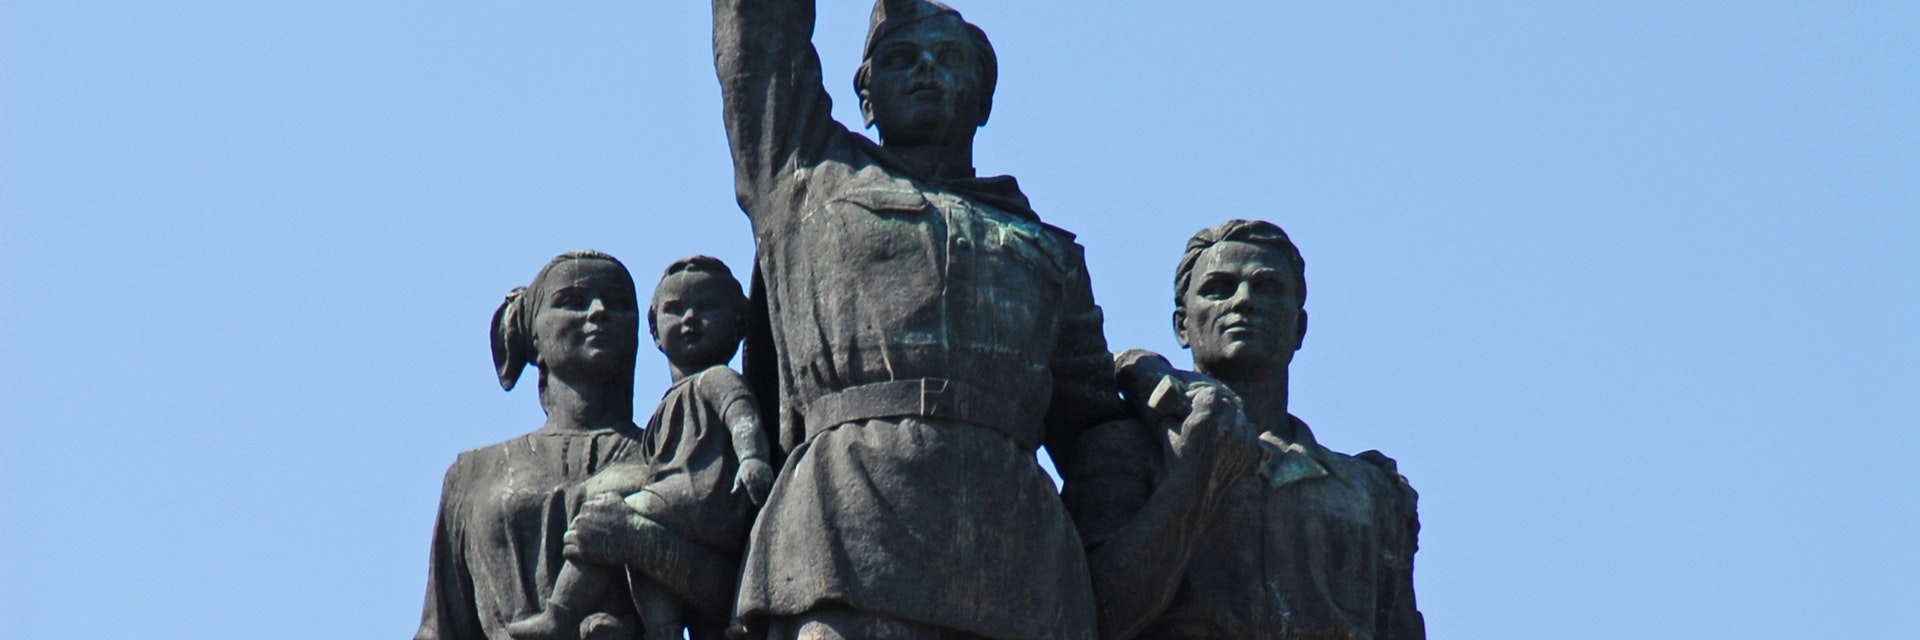 Bulgaria, Sofia, Monument to the Soviet Army, communist-era sculptural group